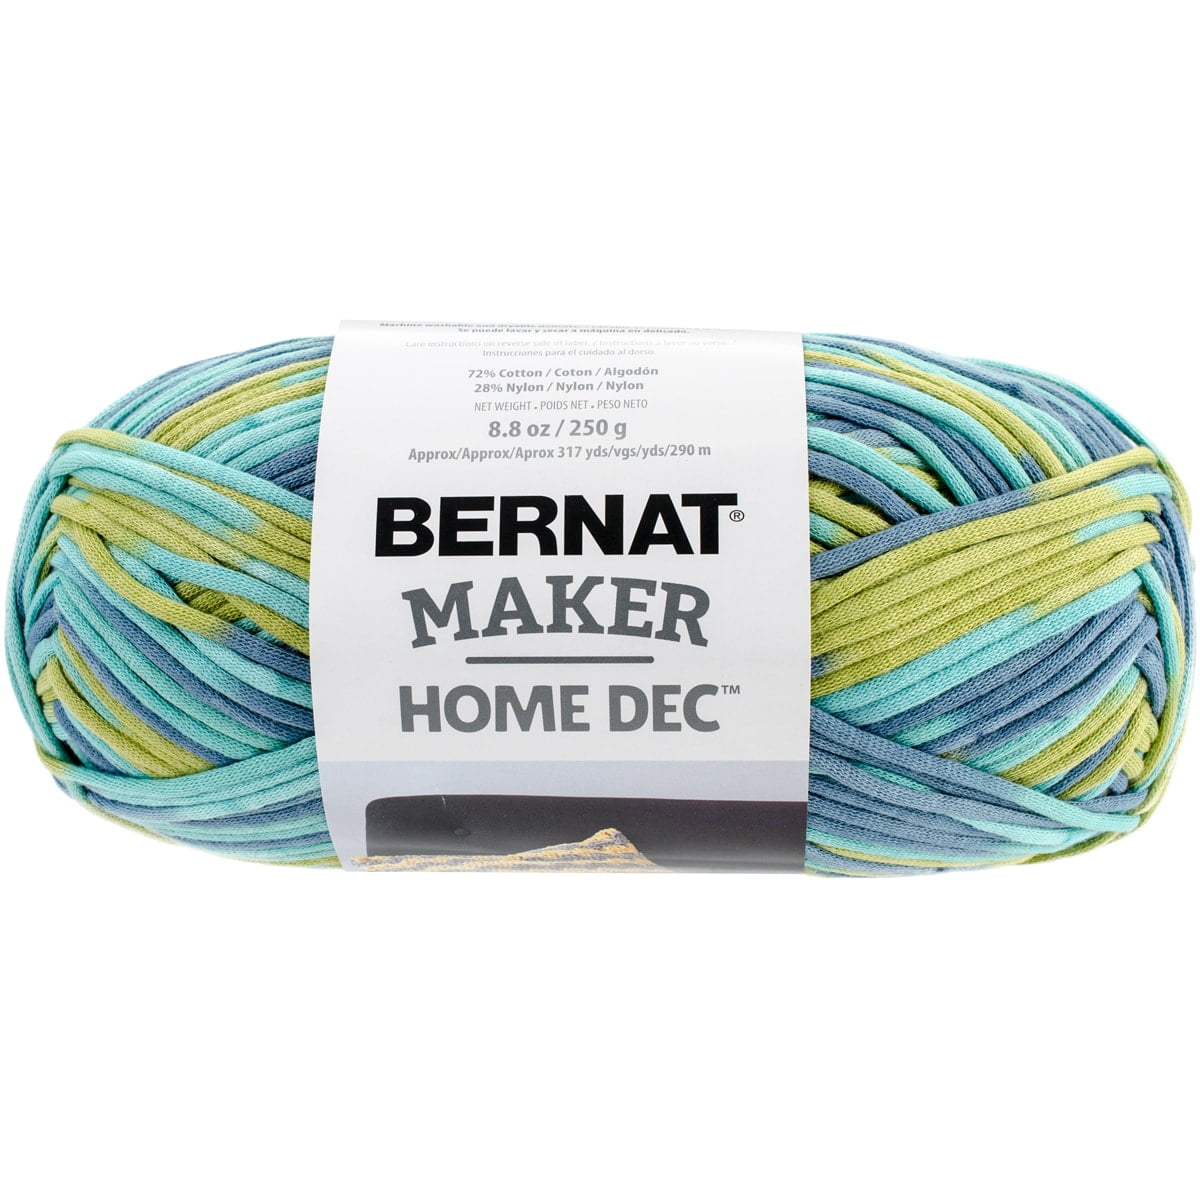 Bernat Maker Home Dec Yarn - Fiesta Variegate